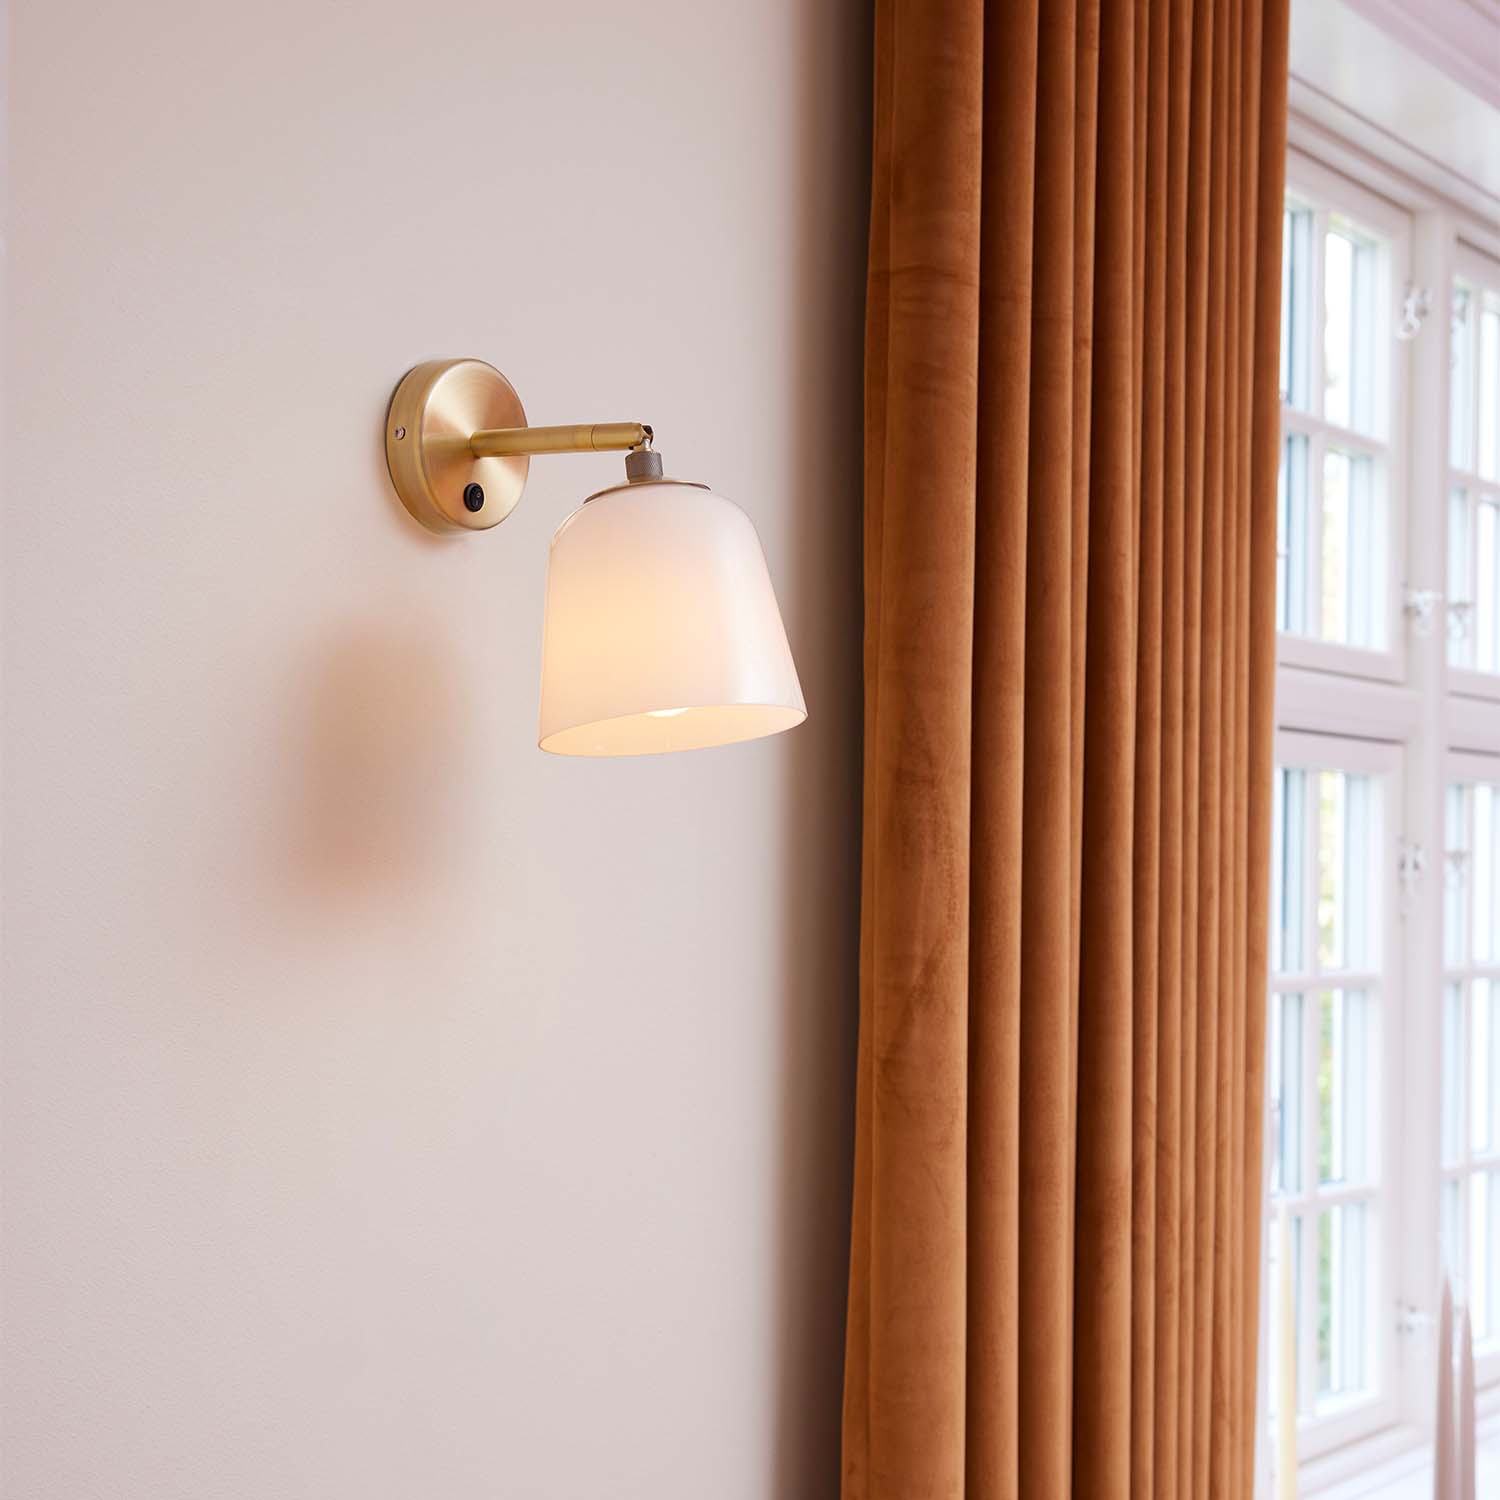 ROOM 49 - Blown glass and brass wall light